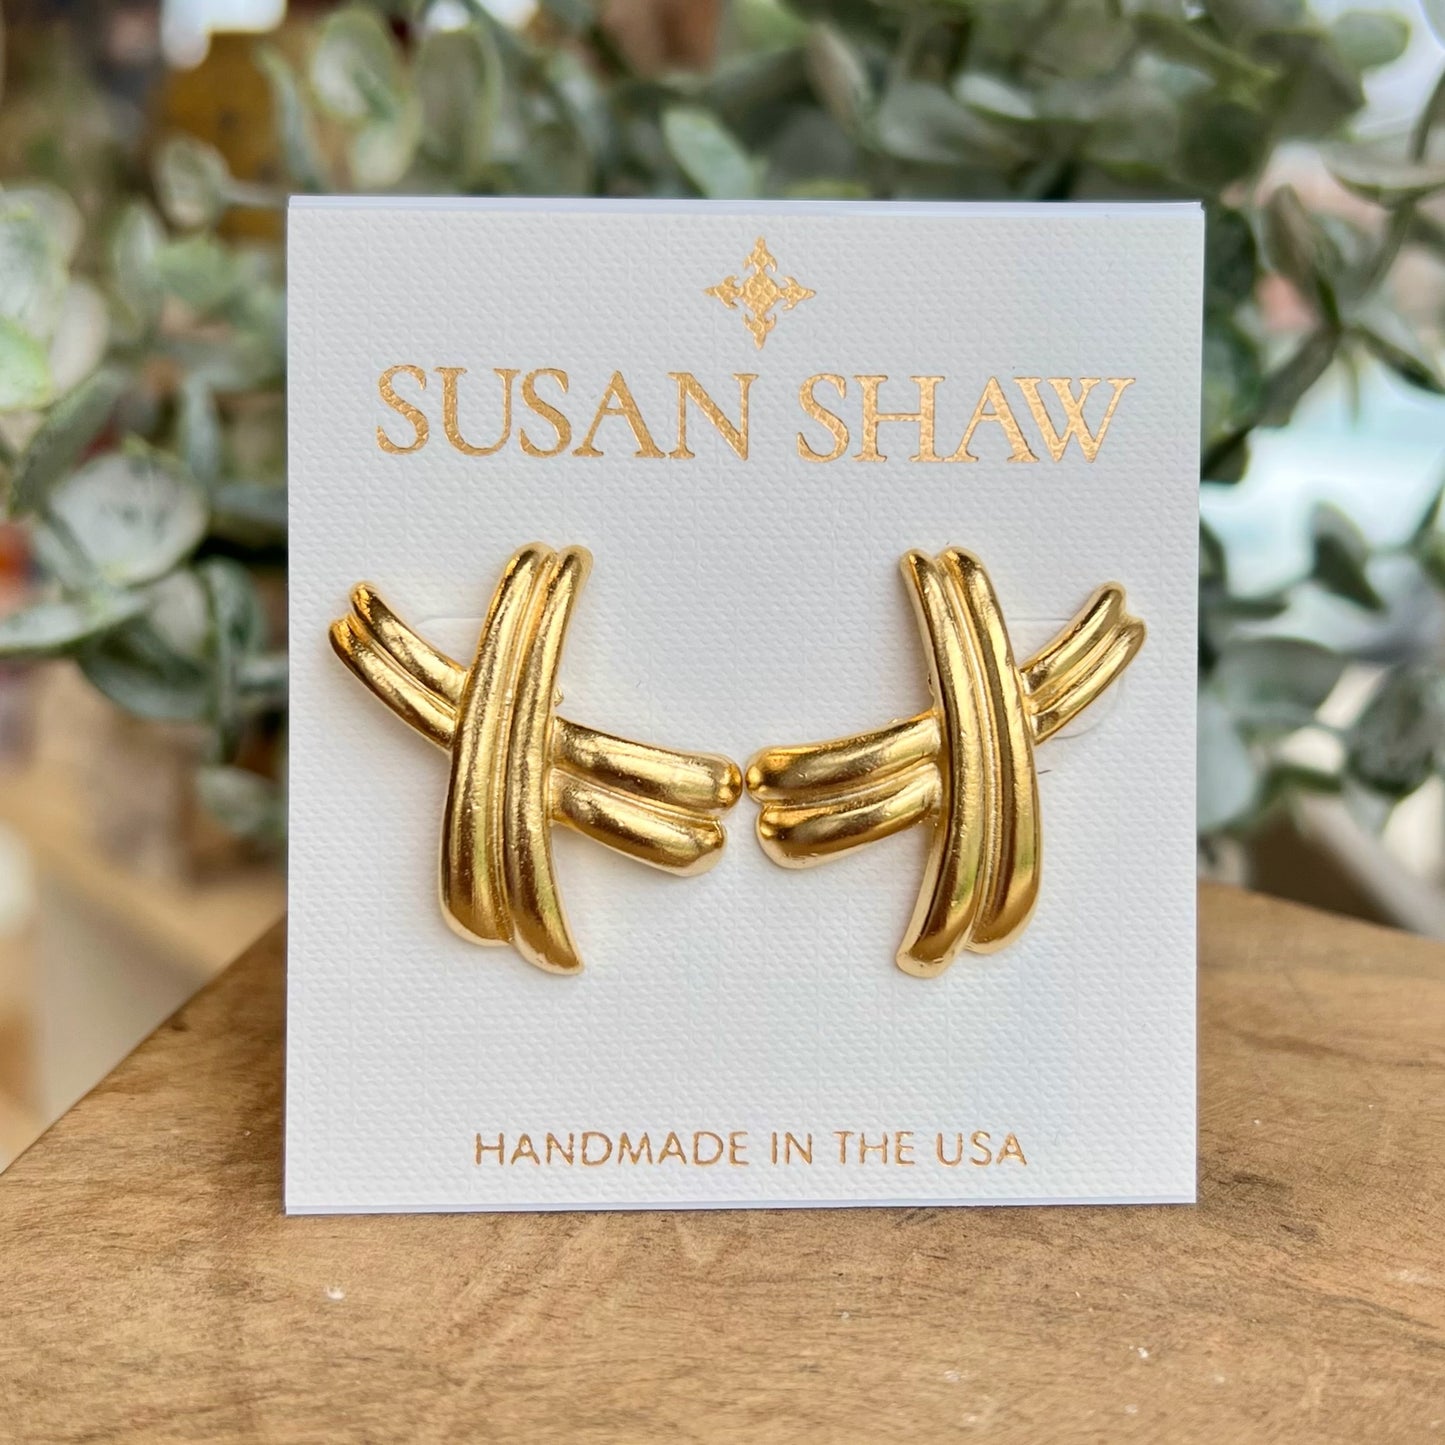 Susan Shaw Gold X Studs Earring